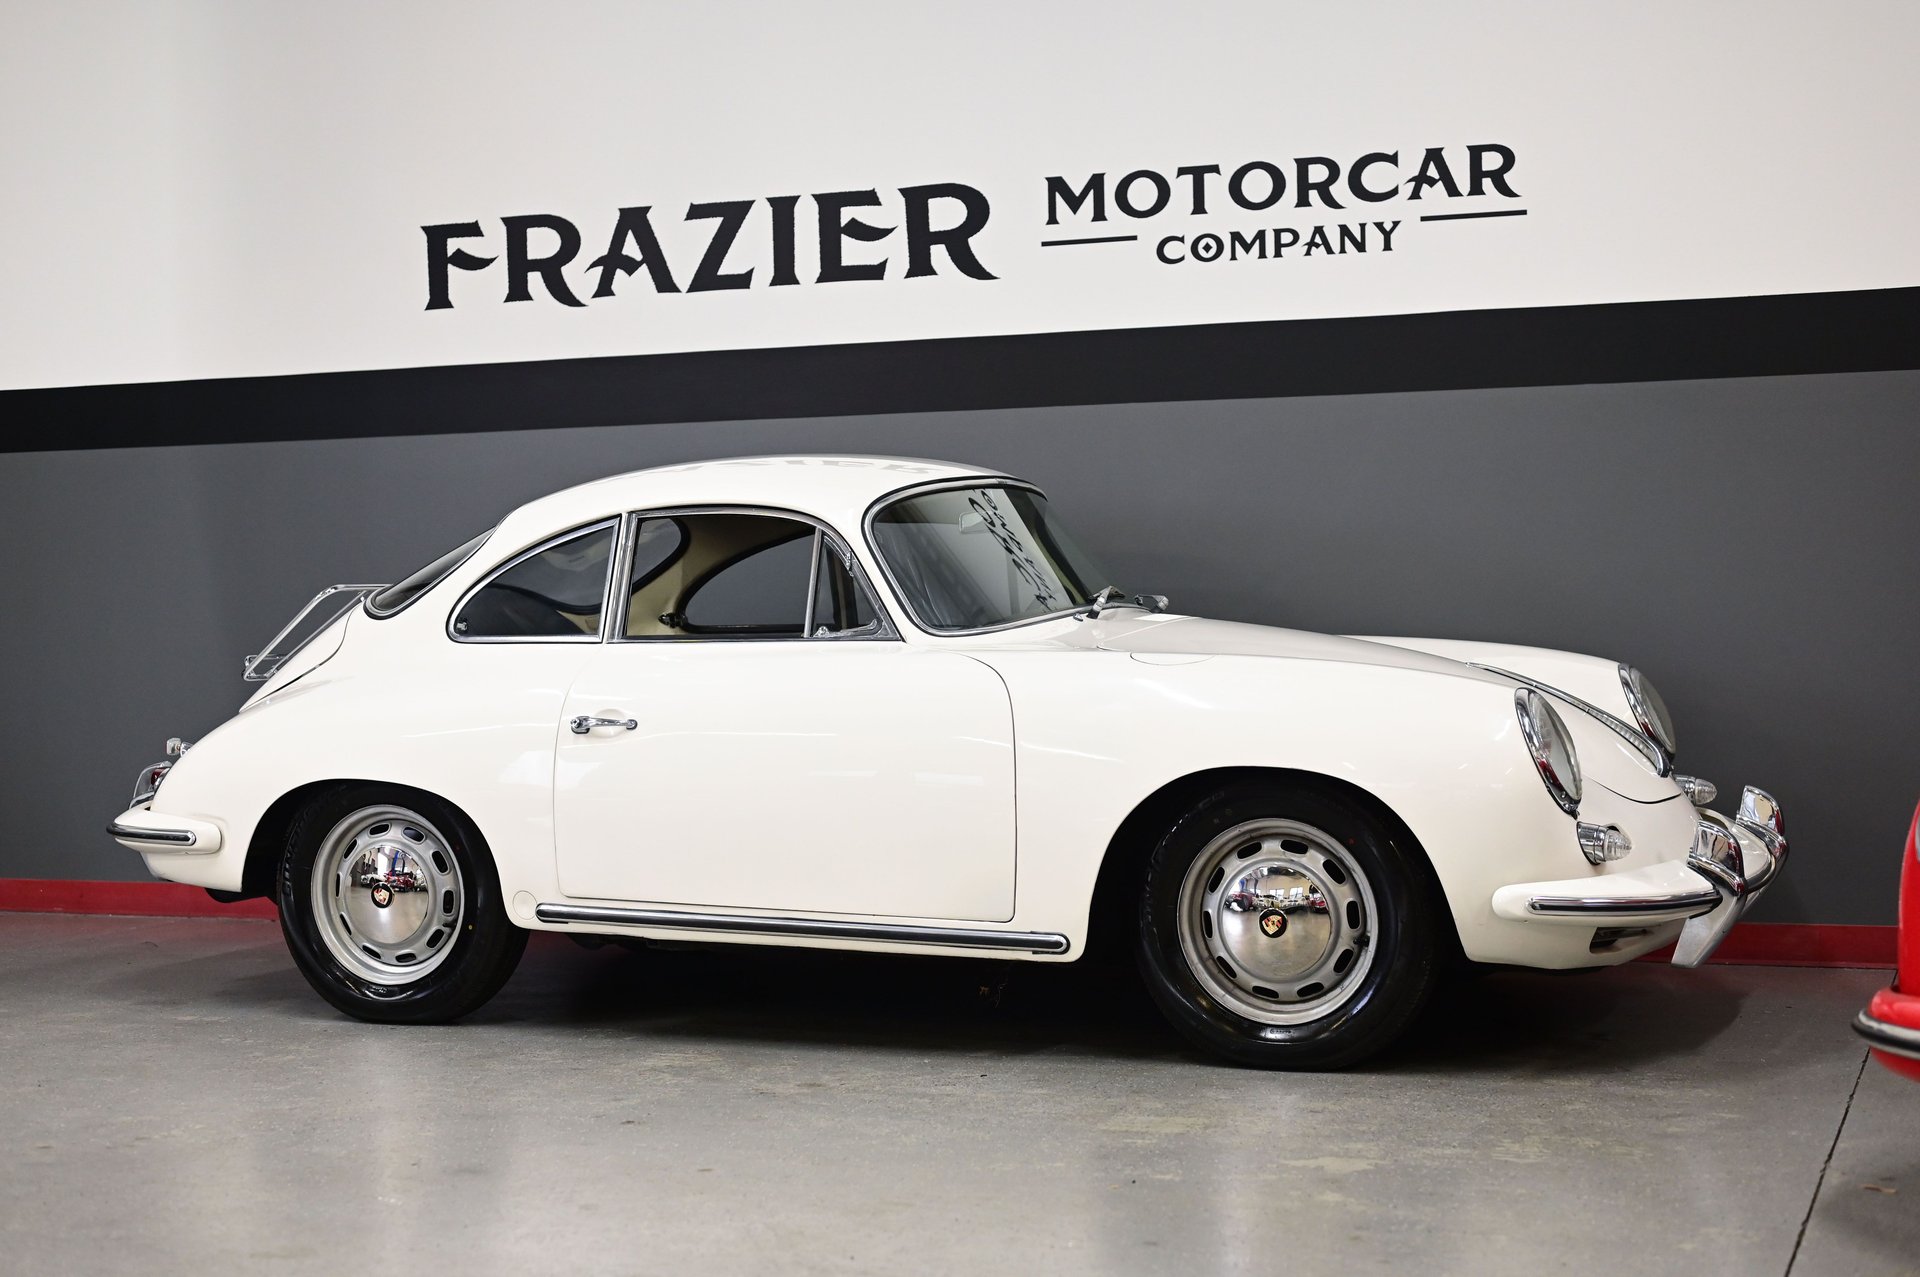 130138 | 1964 Porsche 356 C Coupe | Frazier Motorcar Company